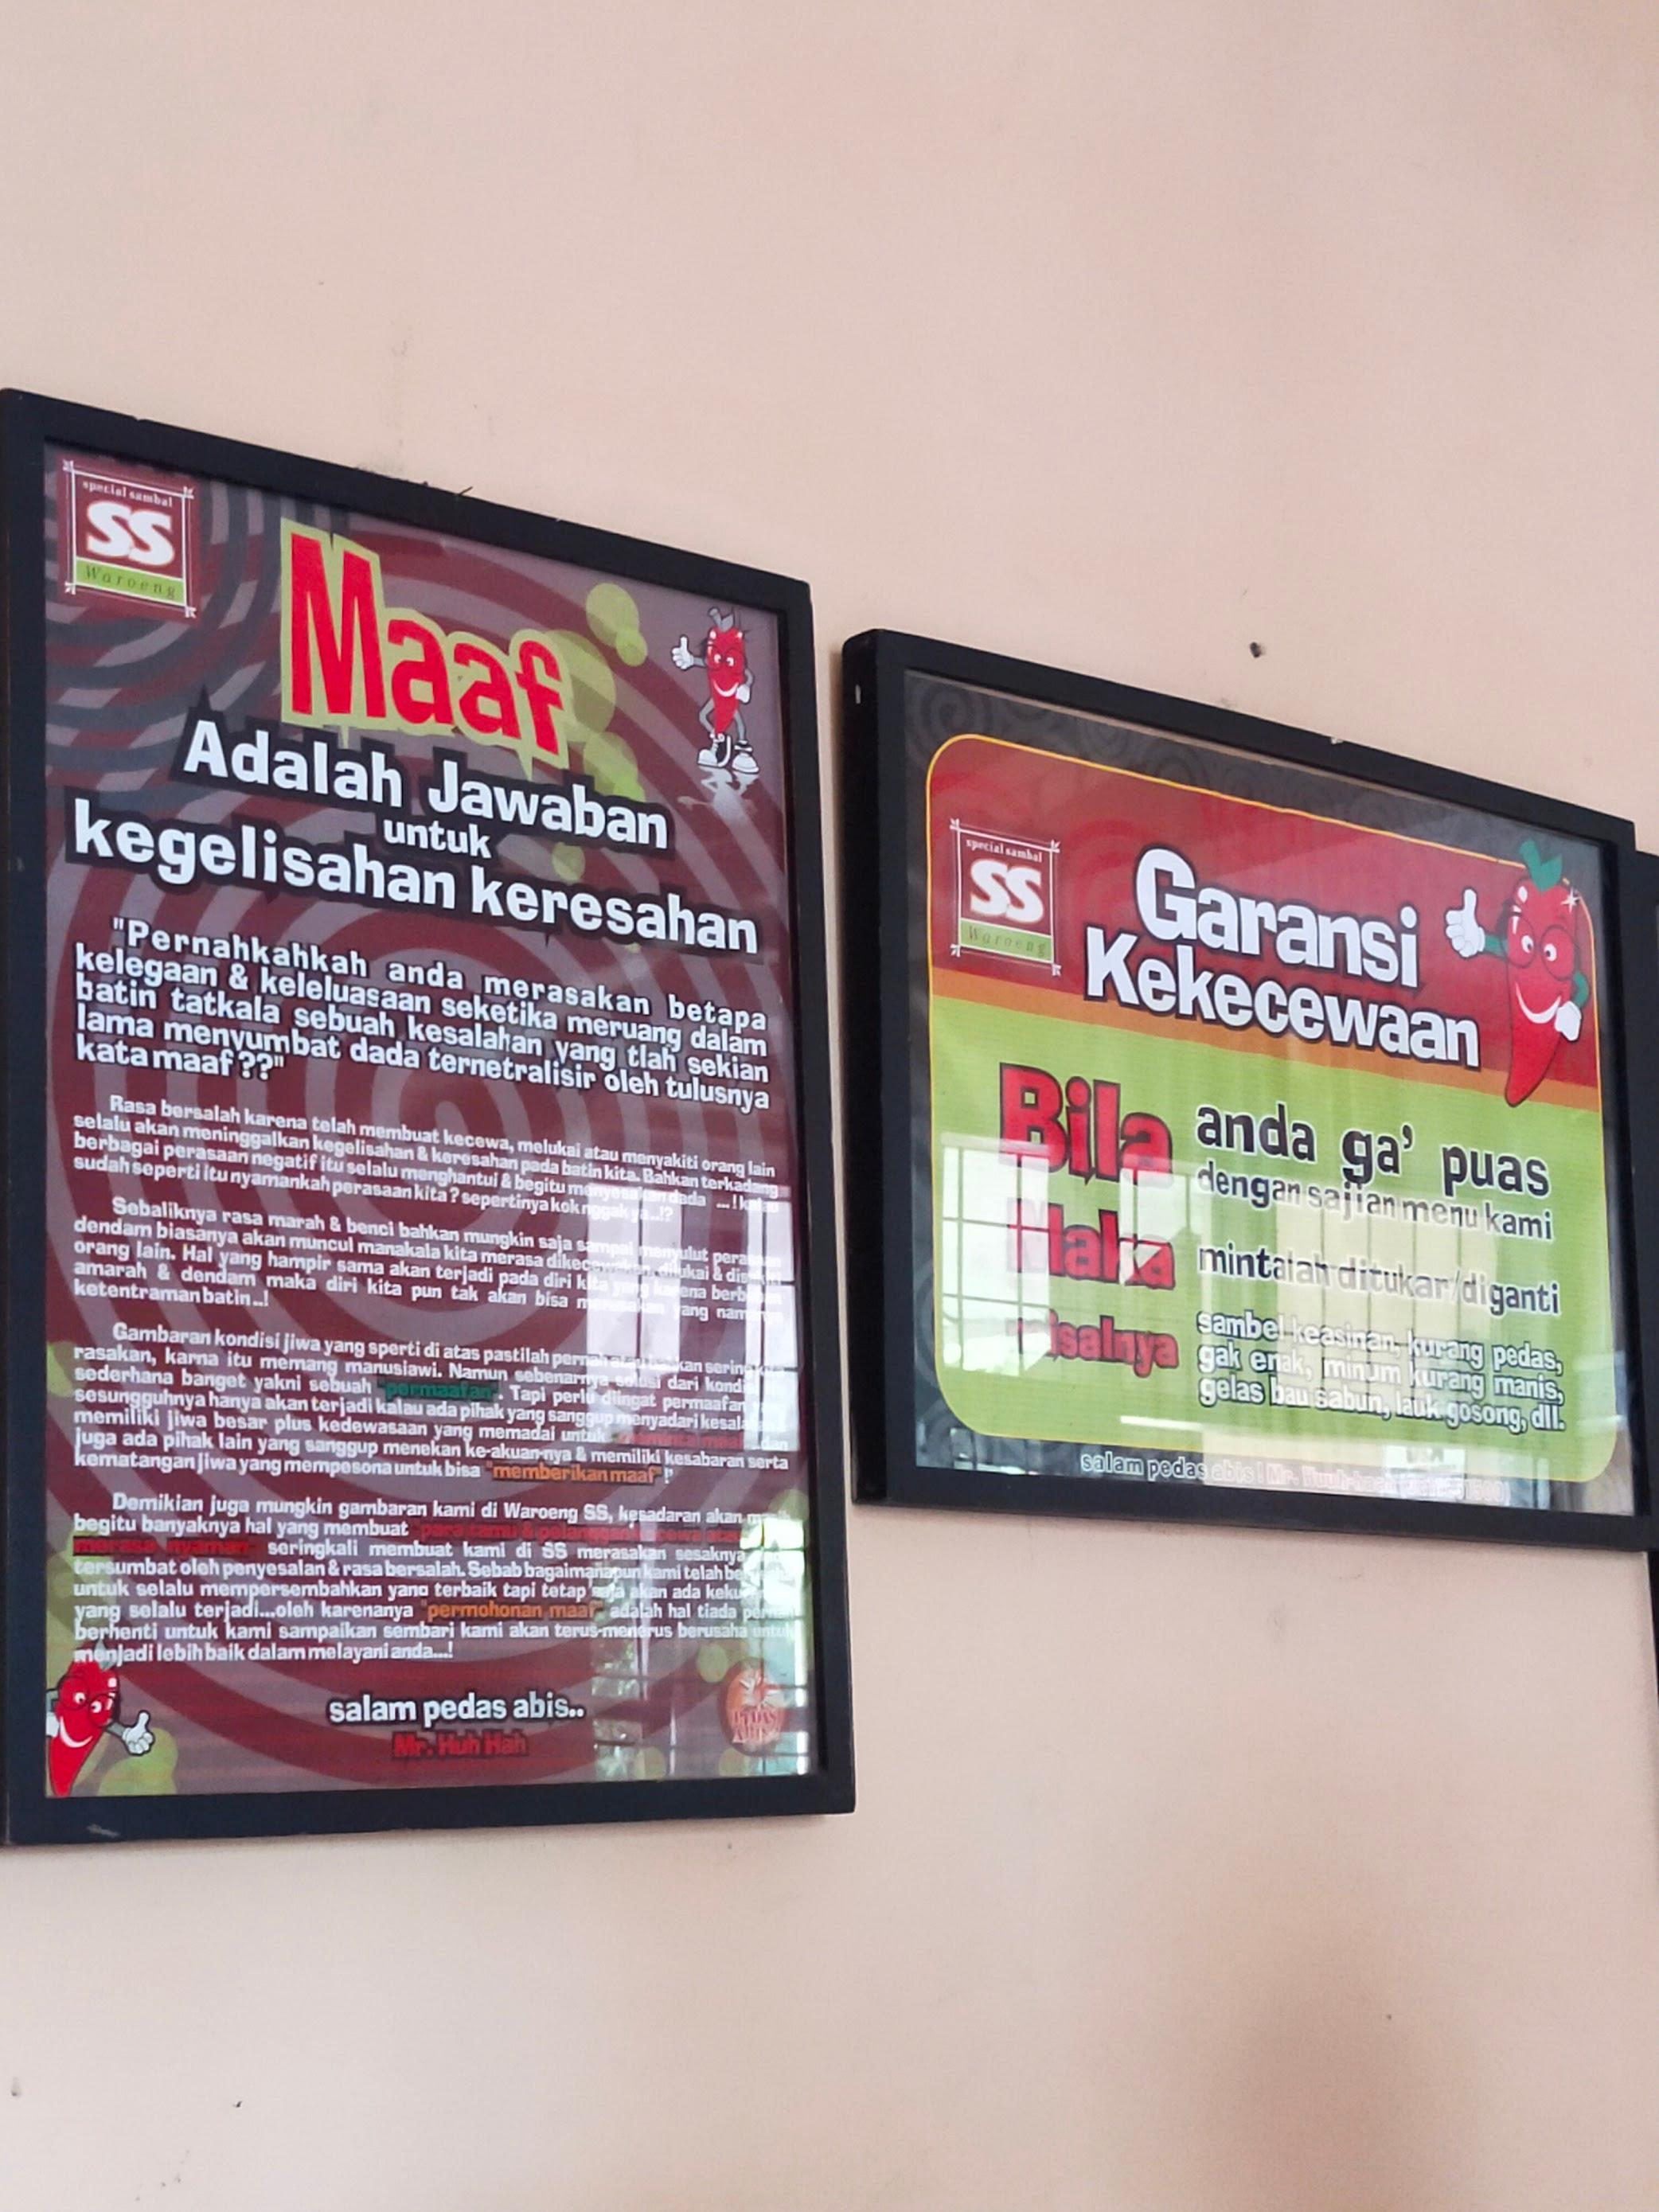 Waroeng Spesial Sambal Ss Cirebon Ampera review